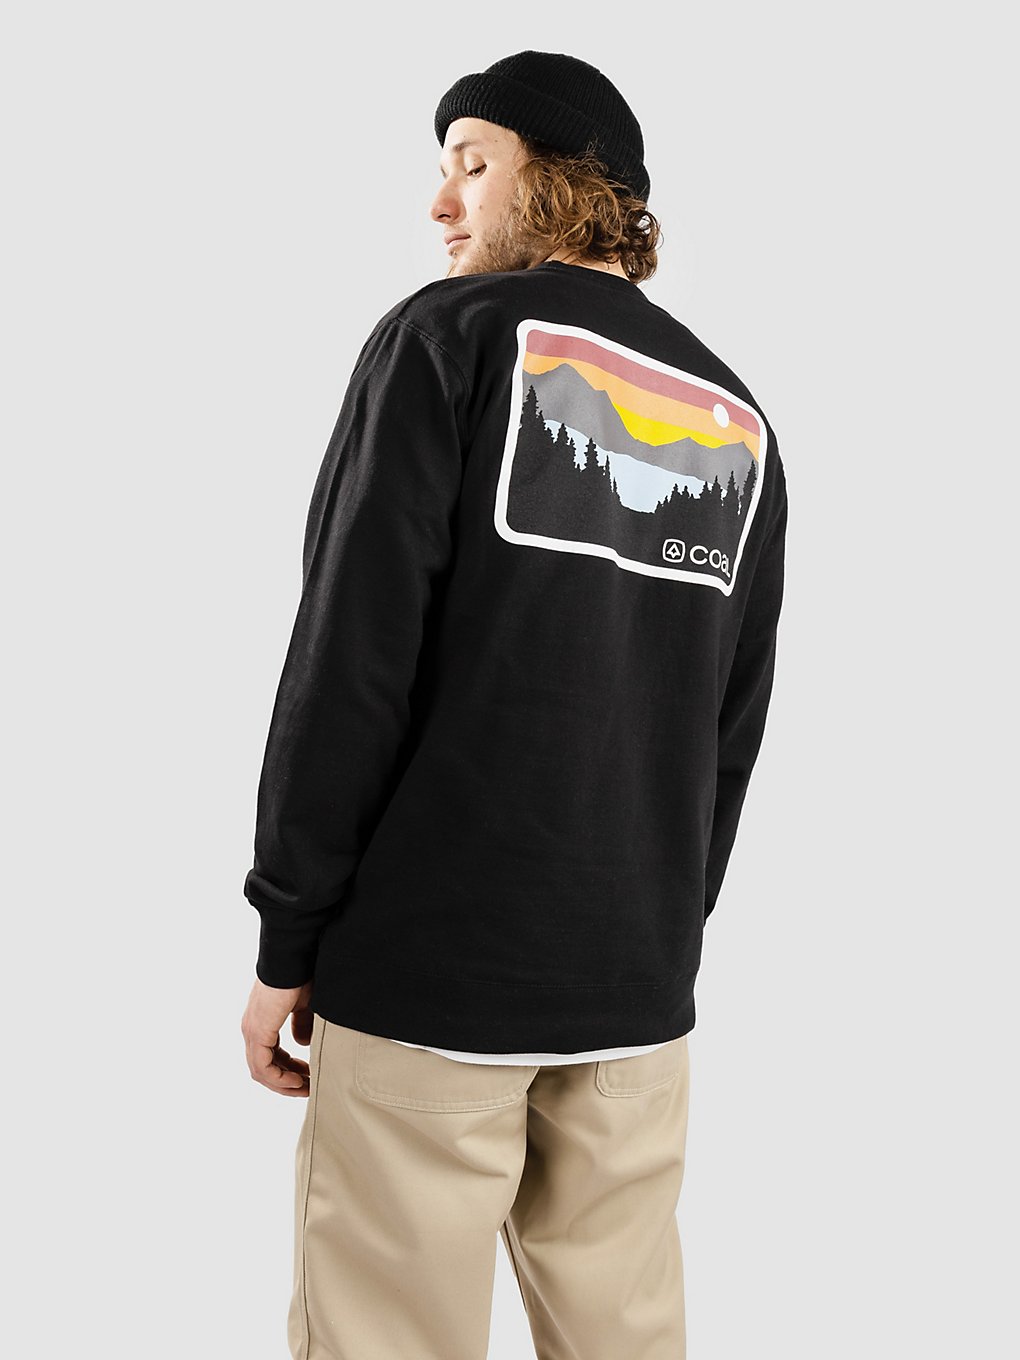 Coal Klamath Crew Neck Sweater black kaufen